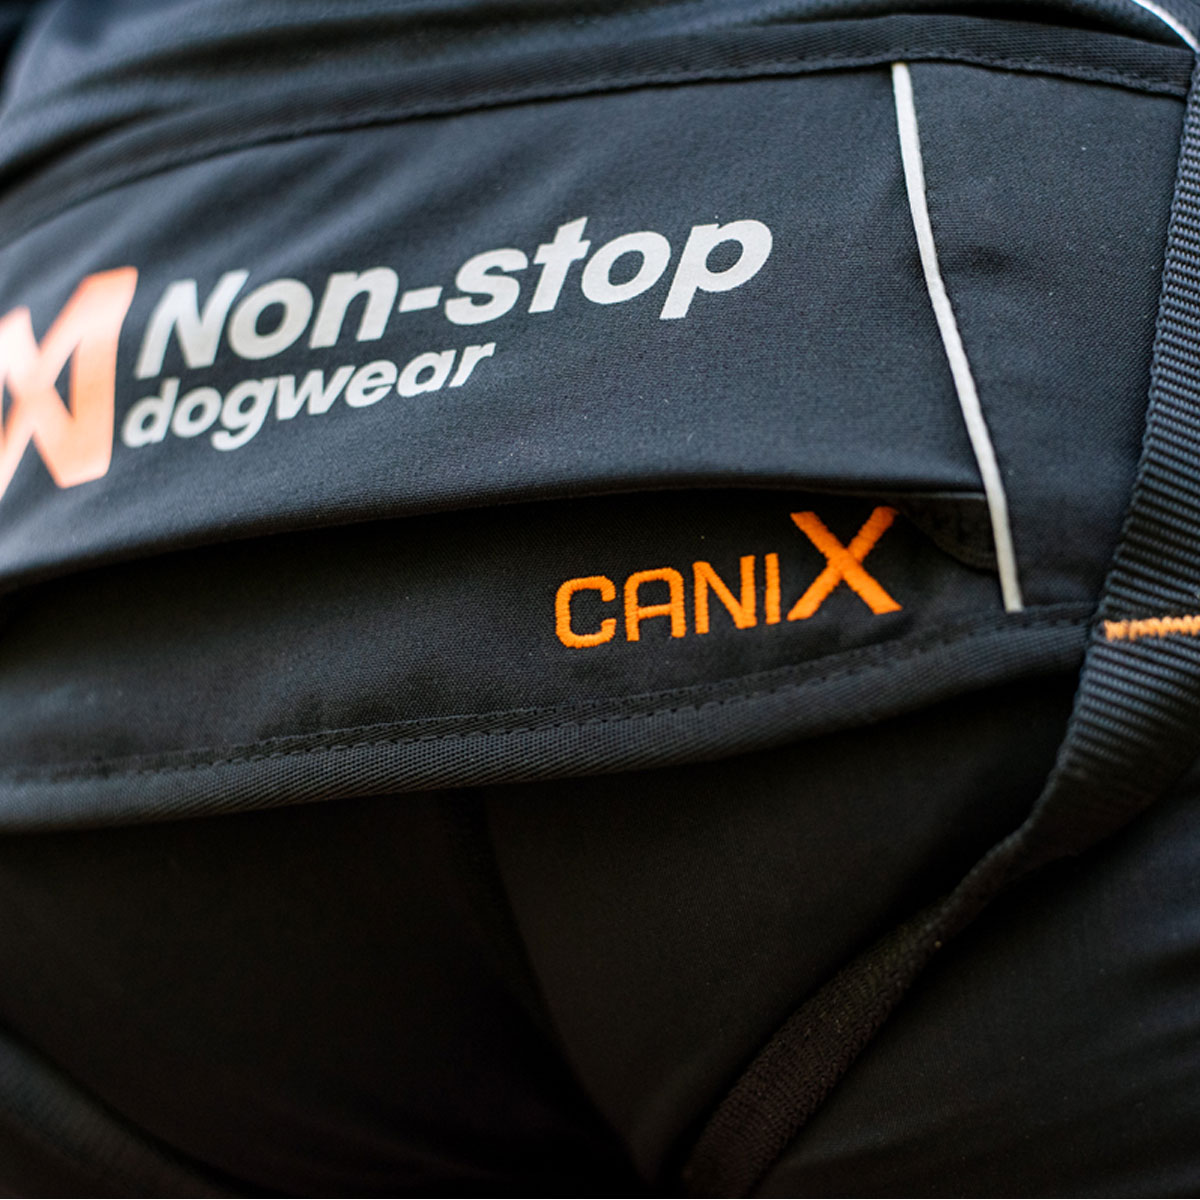 Non-stop dogwear CaniX Belt